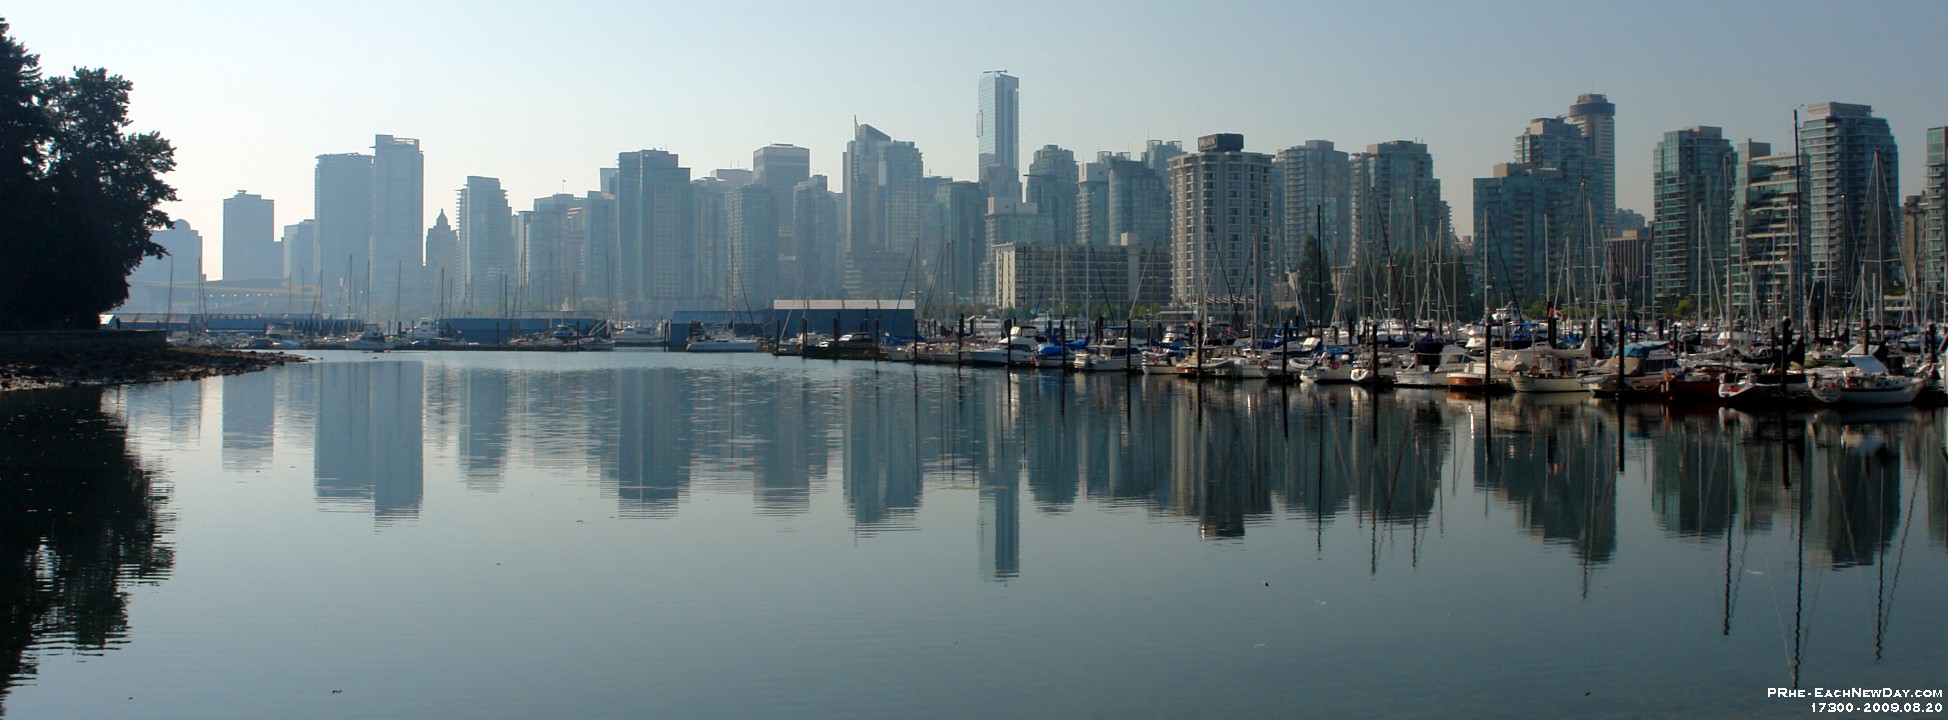 17300RoCrLe - Vancouver harbour